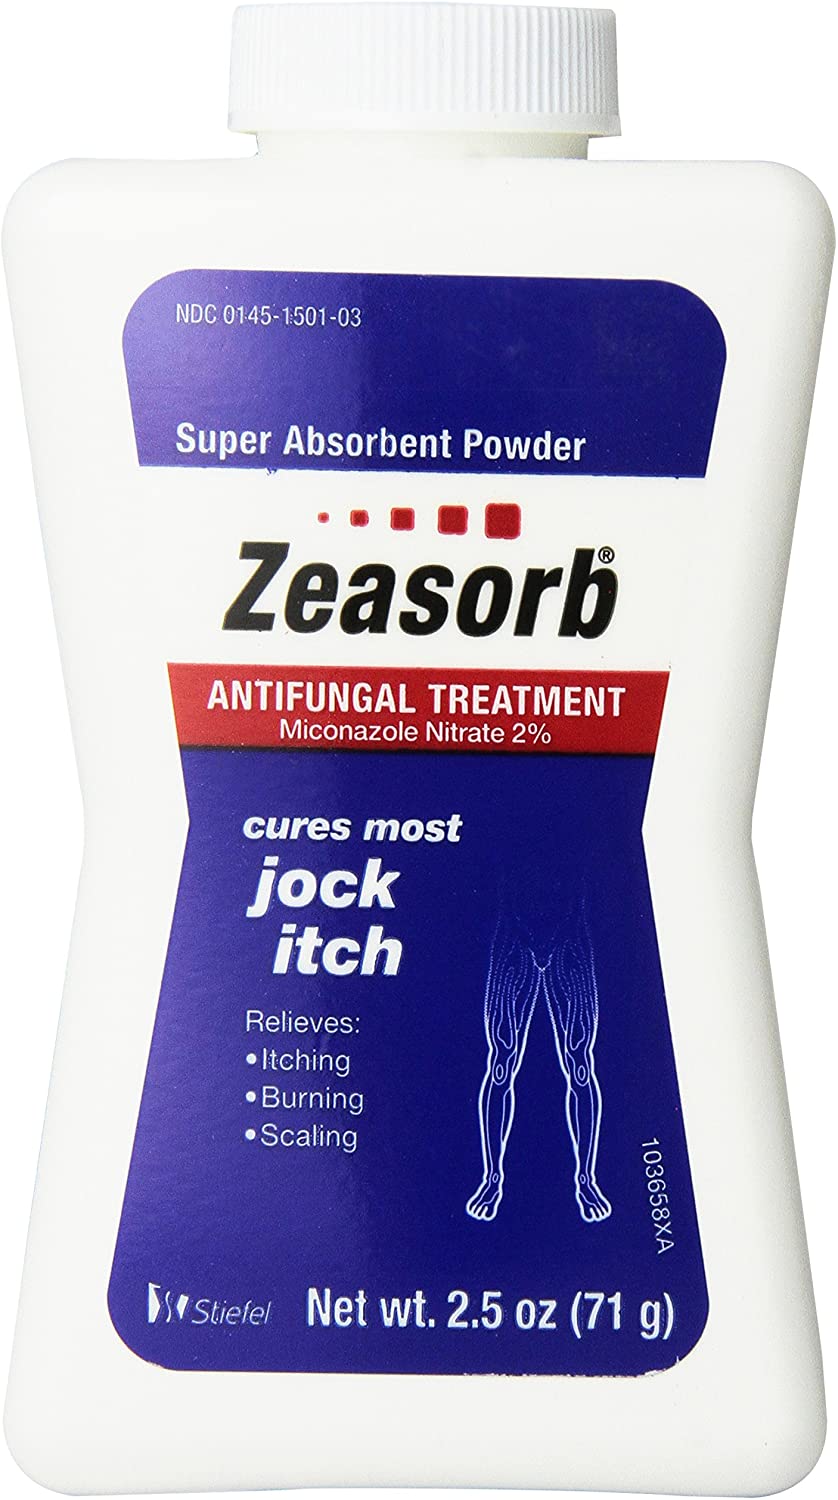 Zeasorb Antifungal Treatment Powder, Jock Itch (3 Pack) - 2.5 Oz (71g)